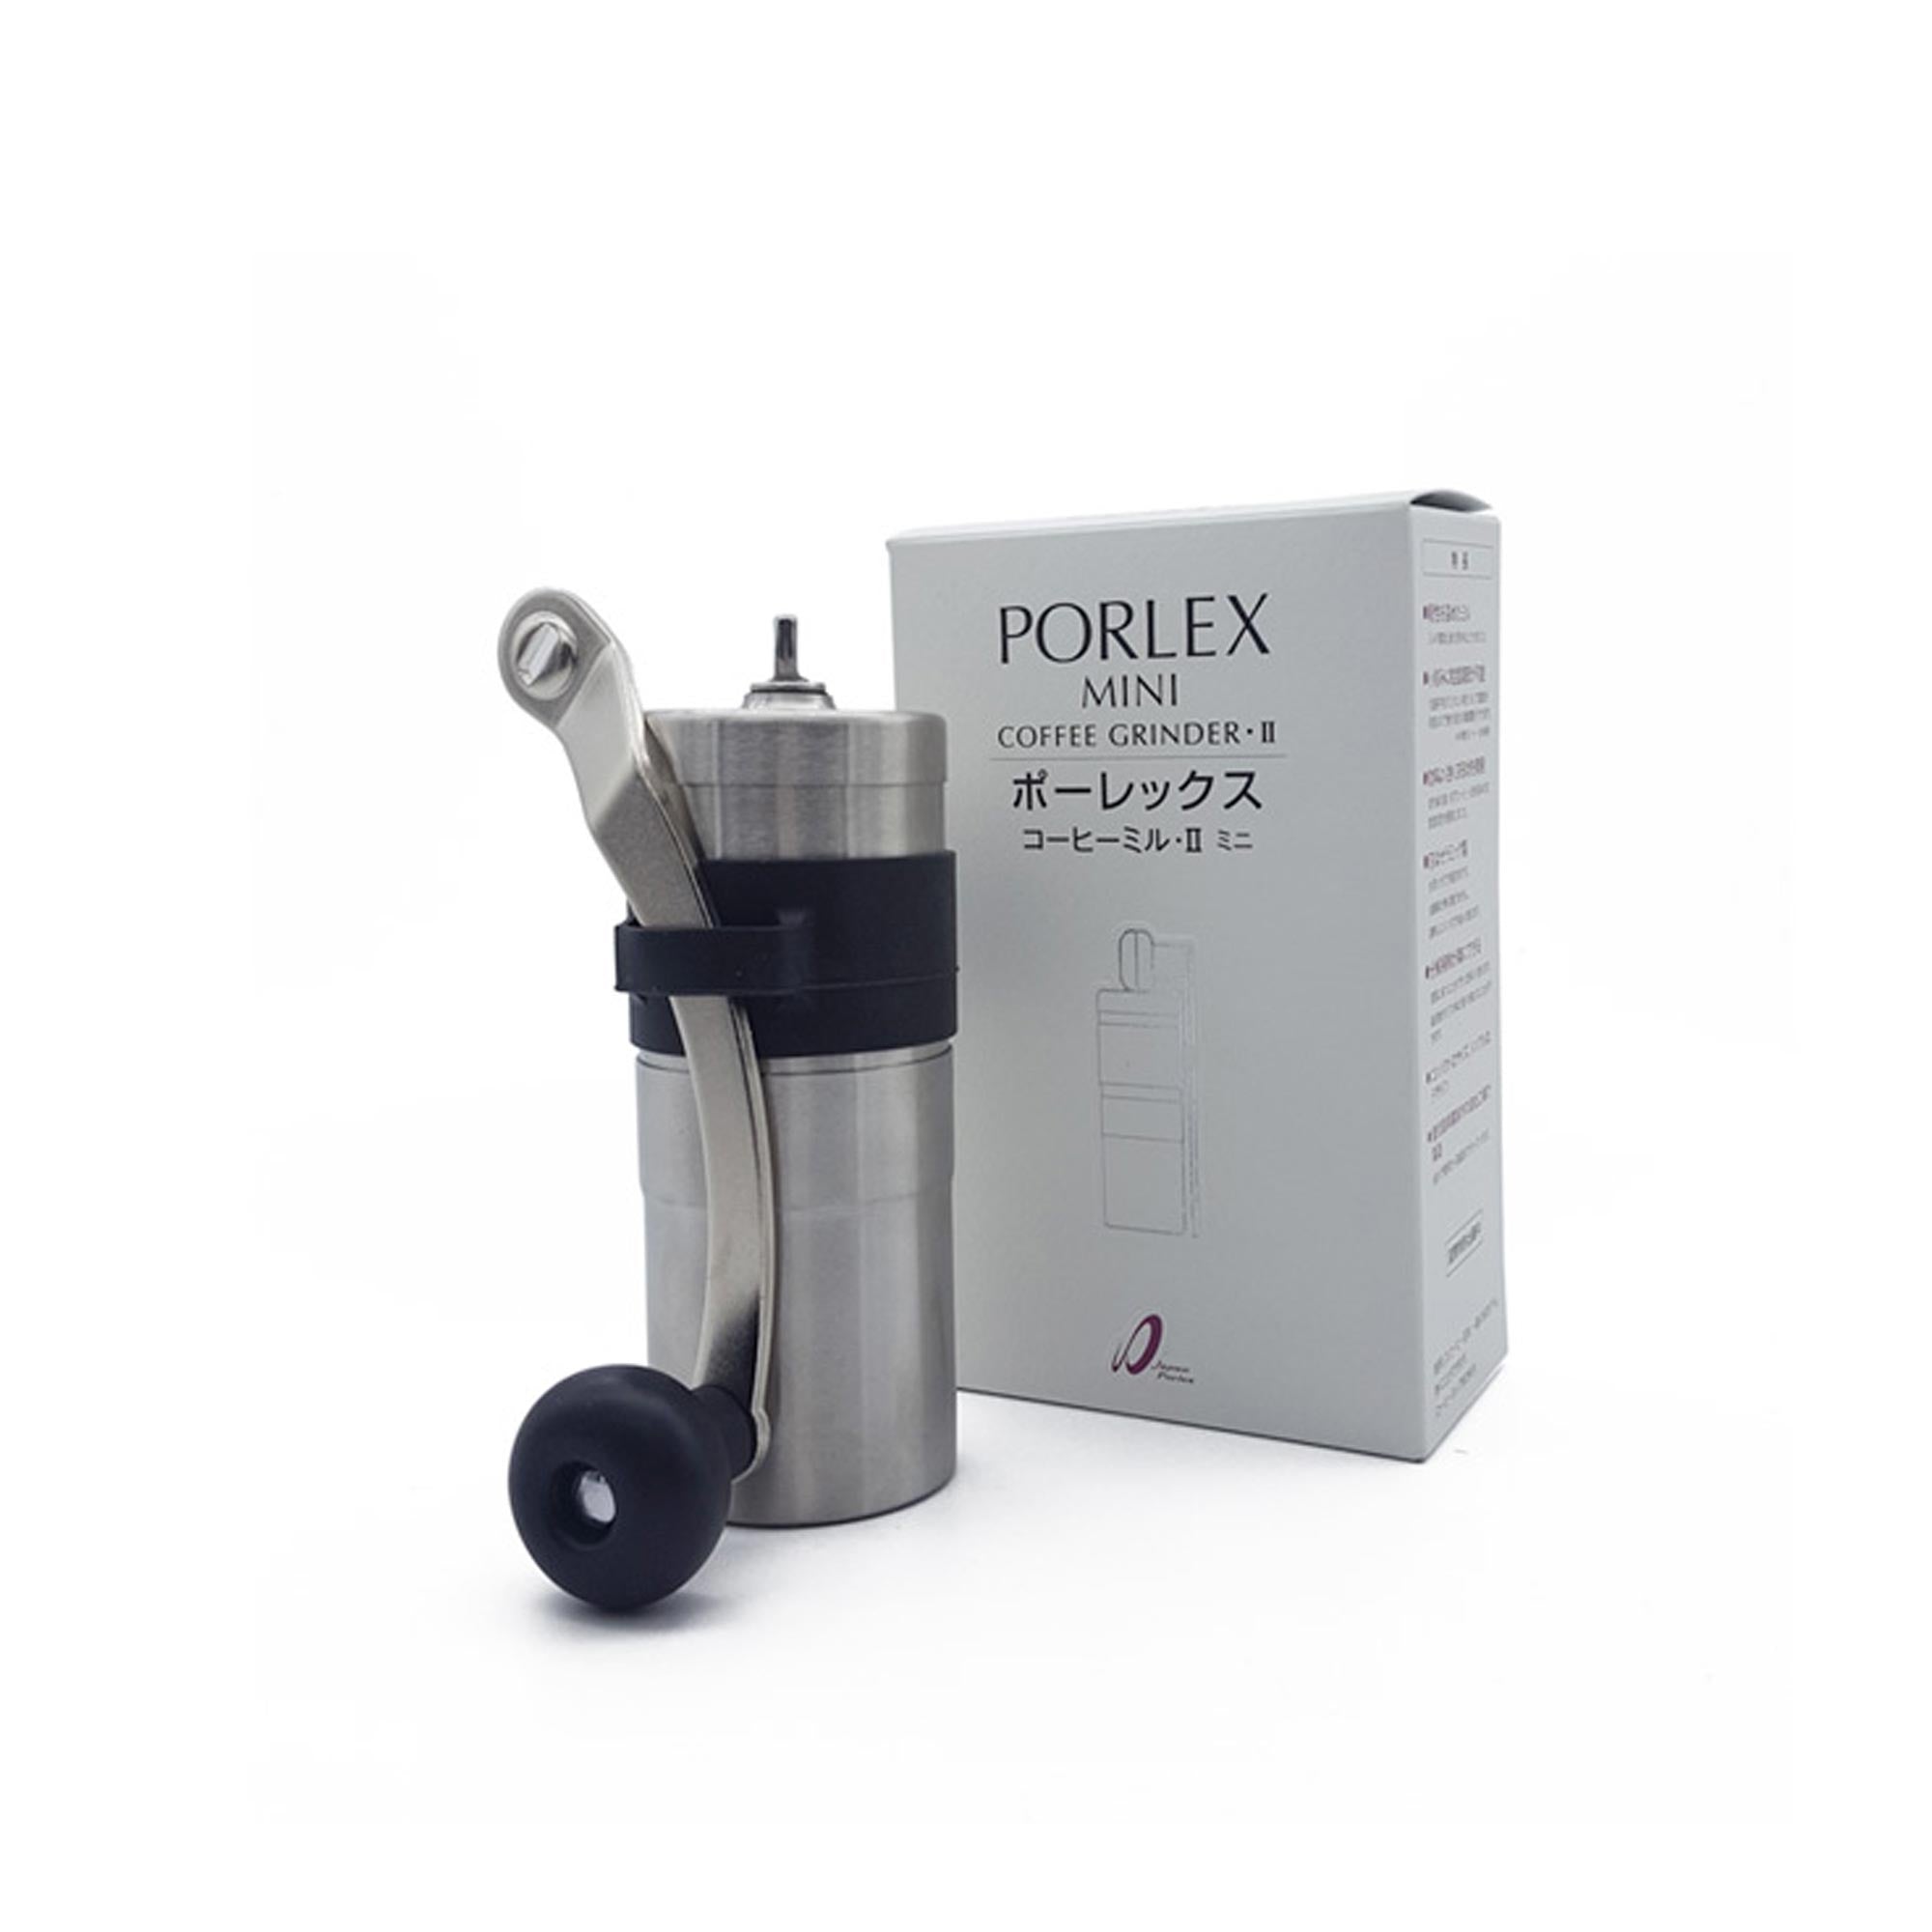 Porlex Mini Stainless Steel Coffee Grinder